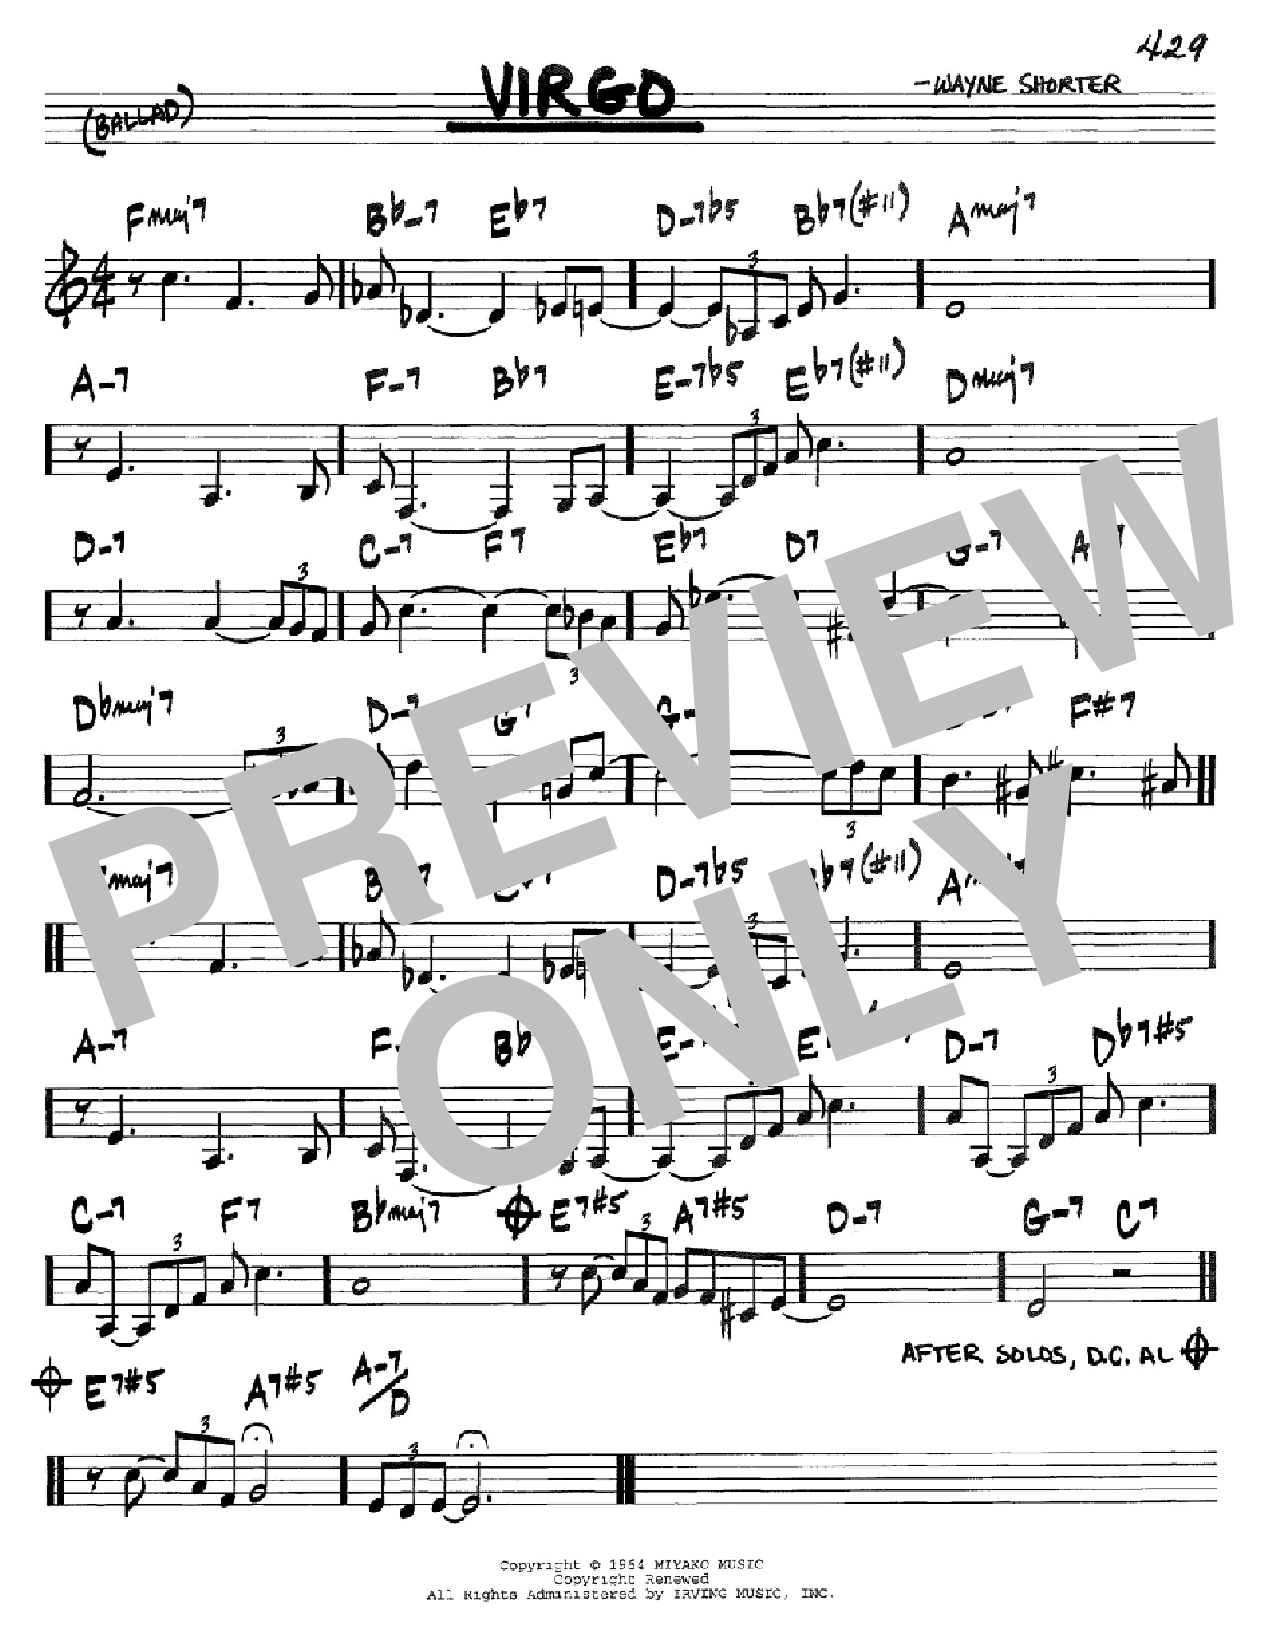 Wayne Shorter Virgo Sheet Music Notes & Chords for Real Book - Melody & Chords - C Instruments - Download or Print PDF